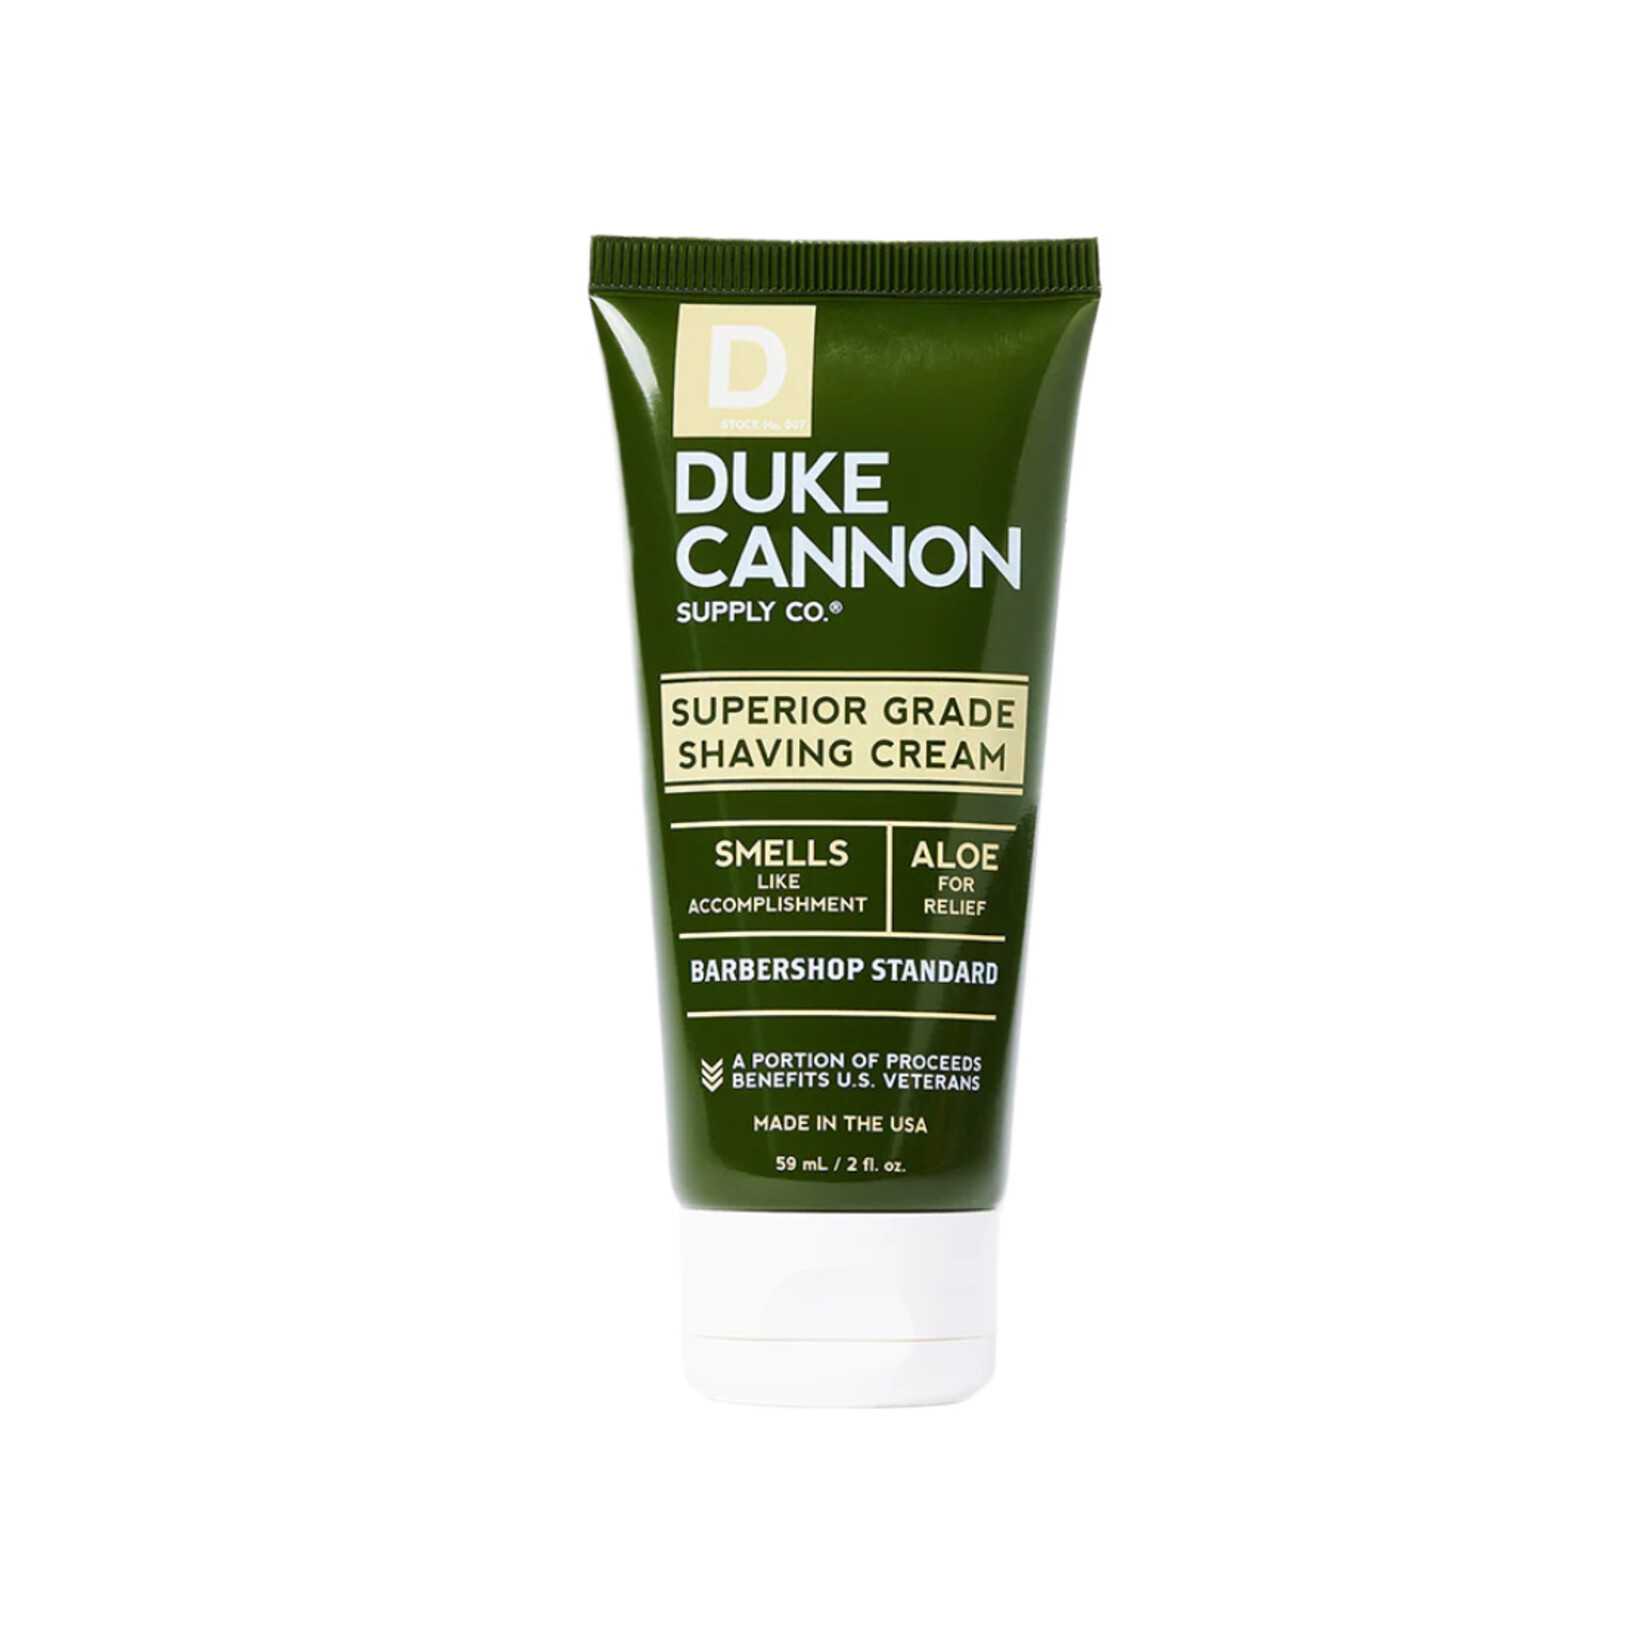 Duke Cannon Superior Grade Shaving Cream, Travel Size